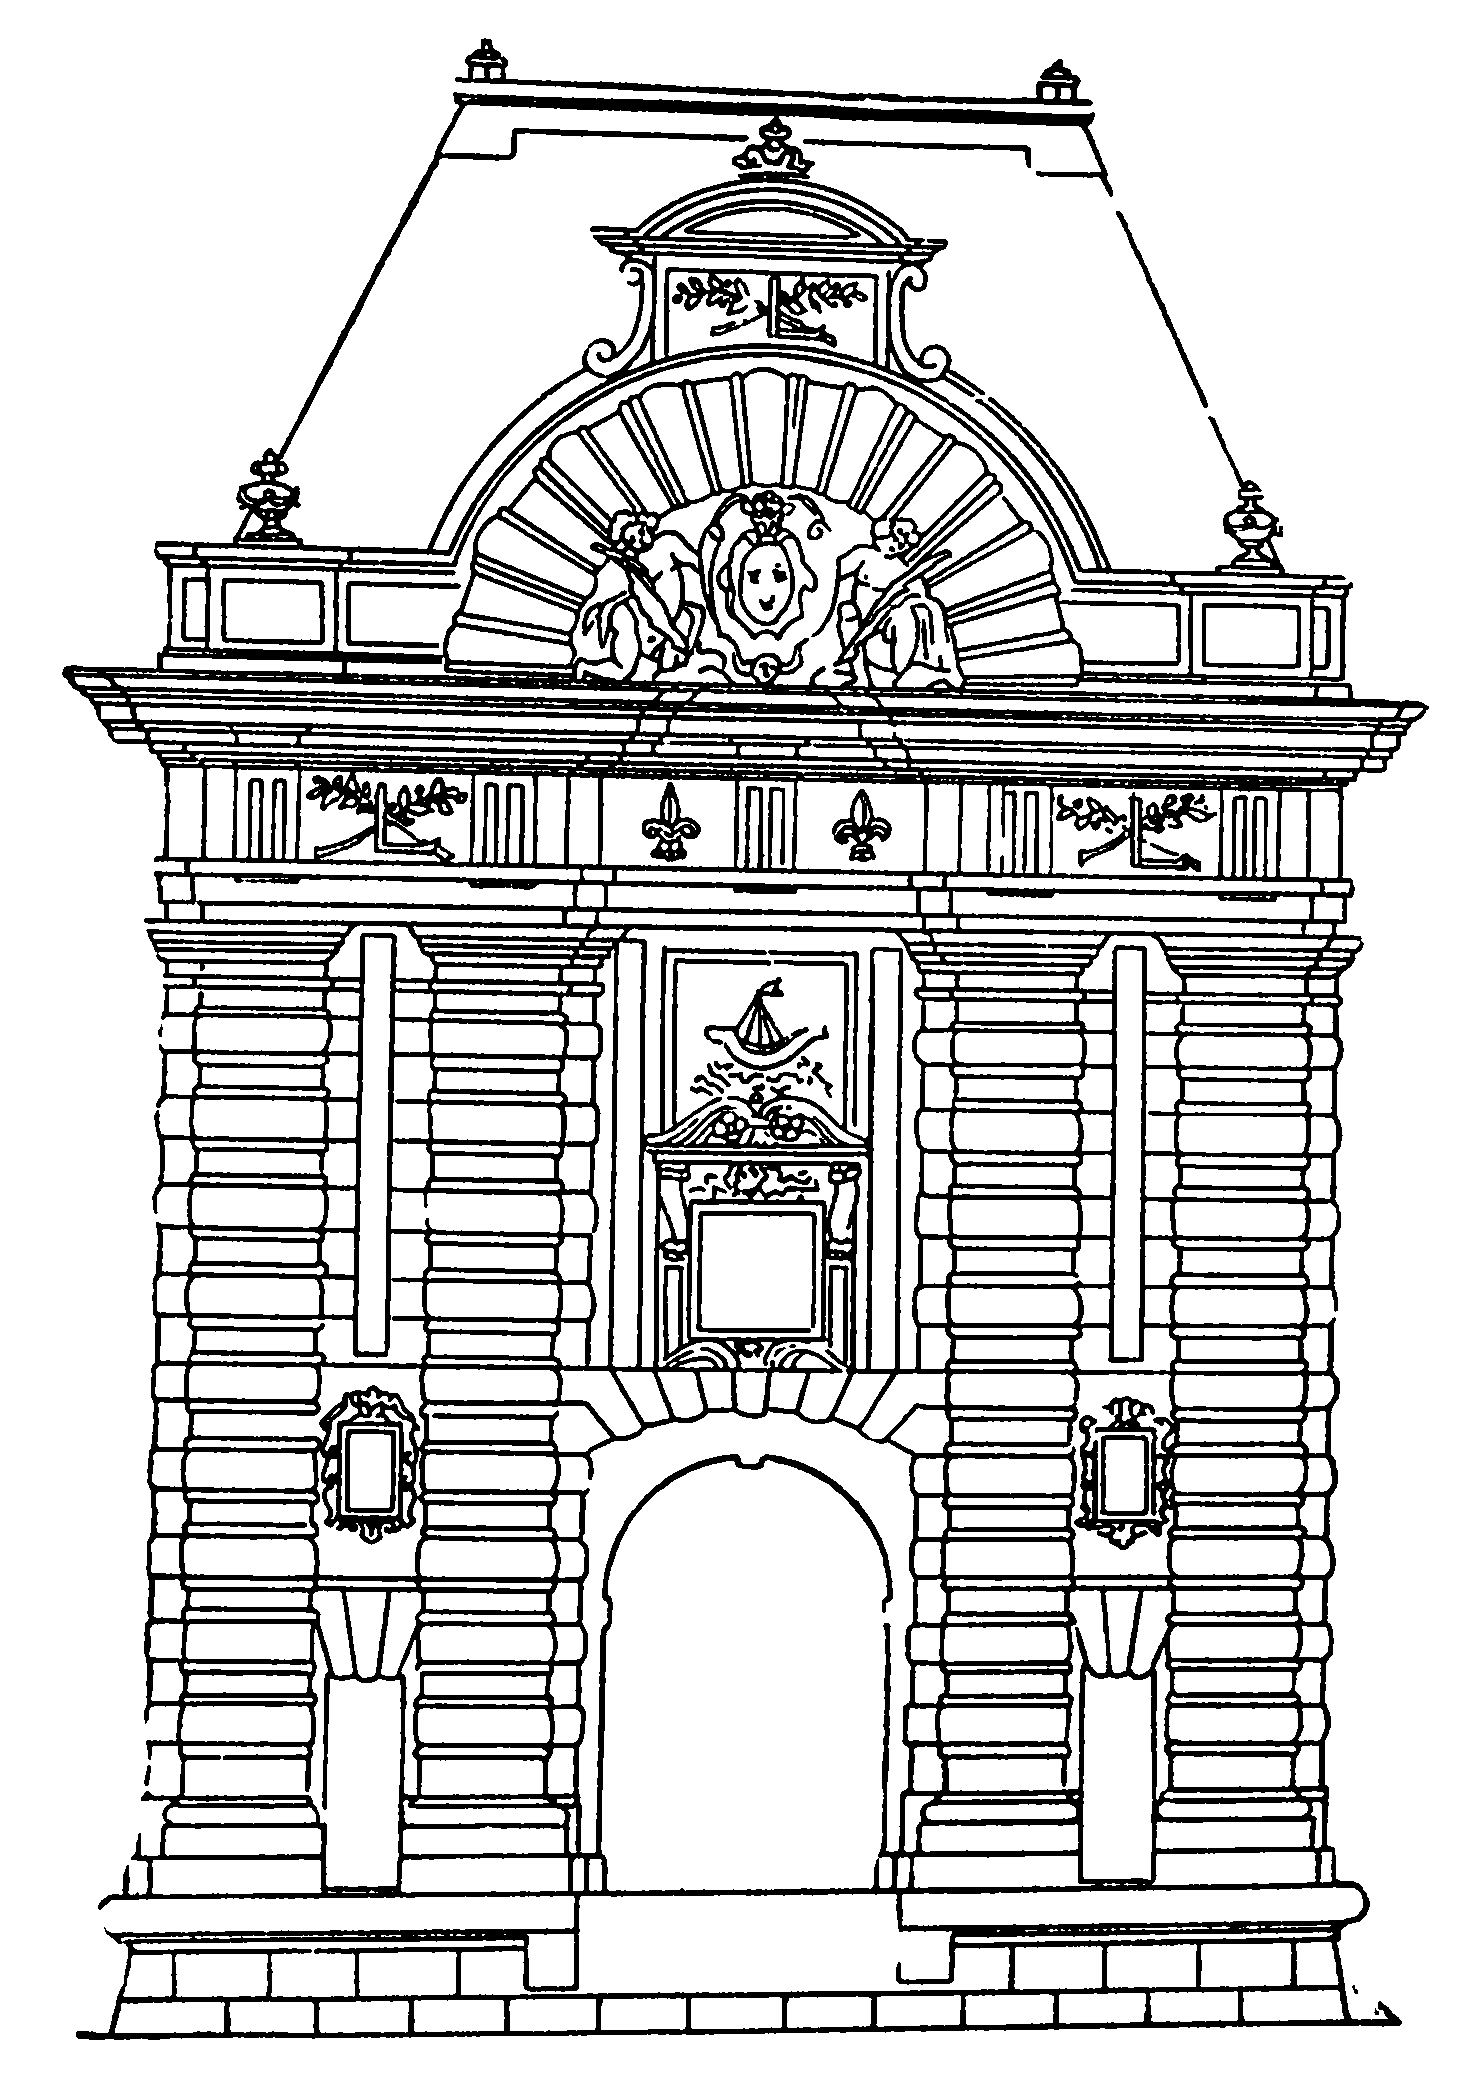 3. Париж. Ворота Сент-Оноре, до 1626 г., С. де Бросс и Ш. дю Ри (проект не осуществлен)